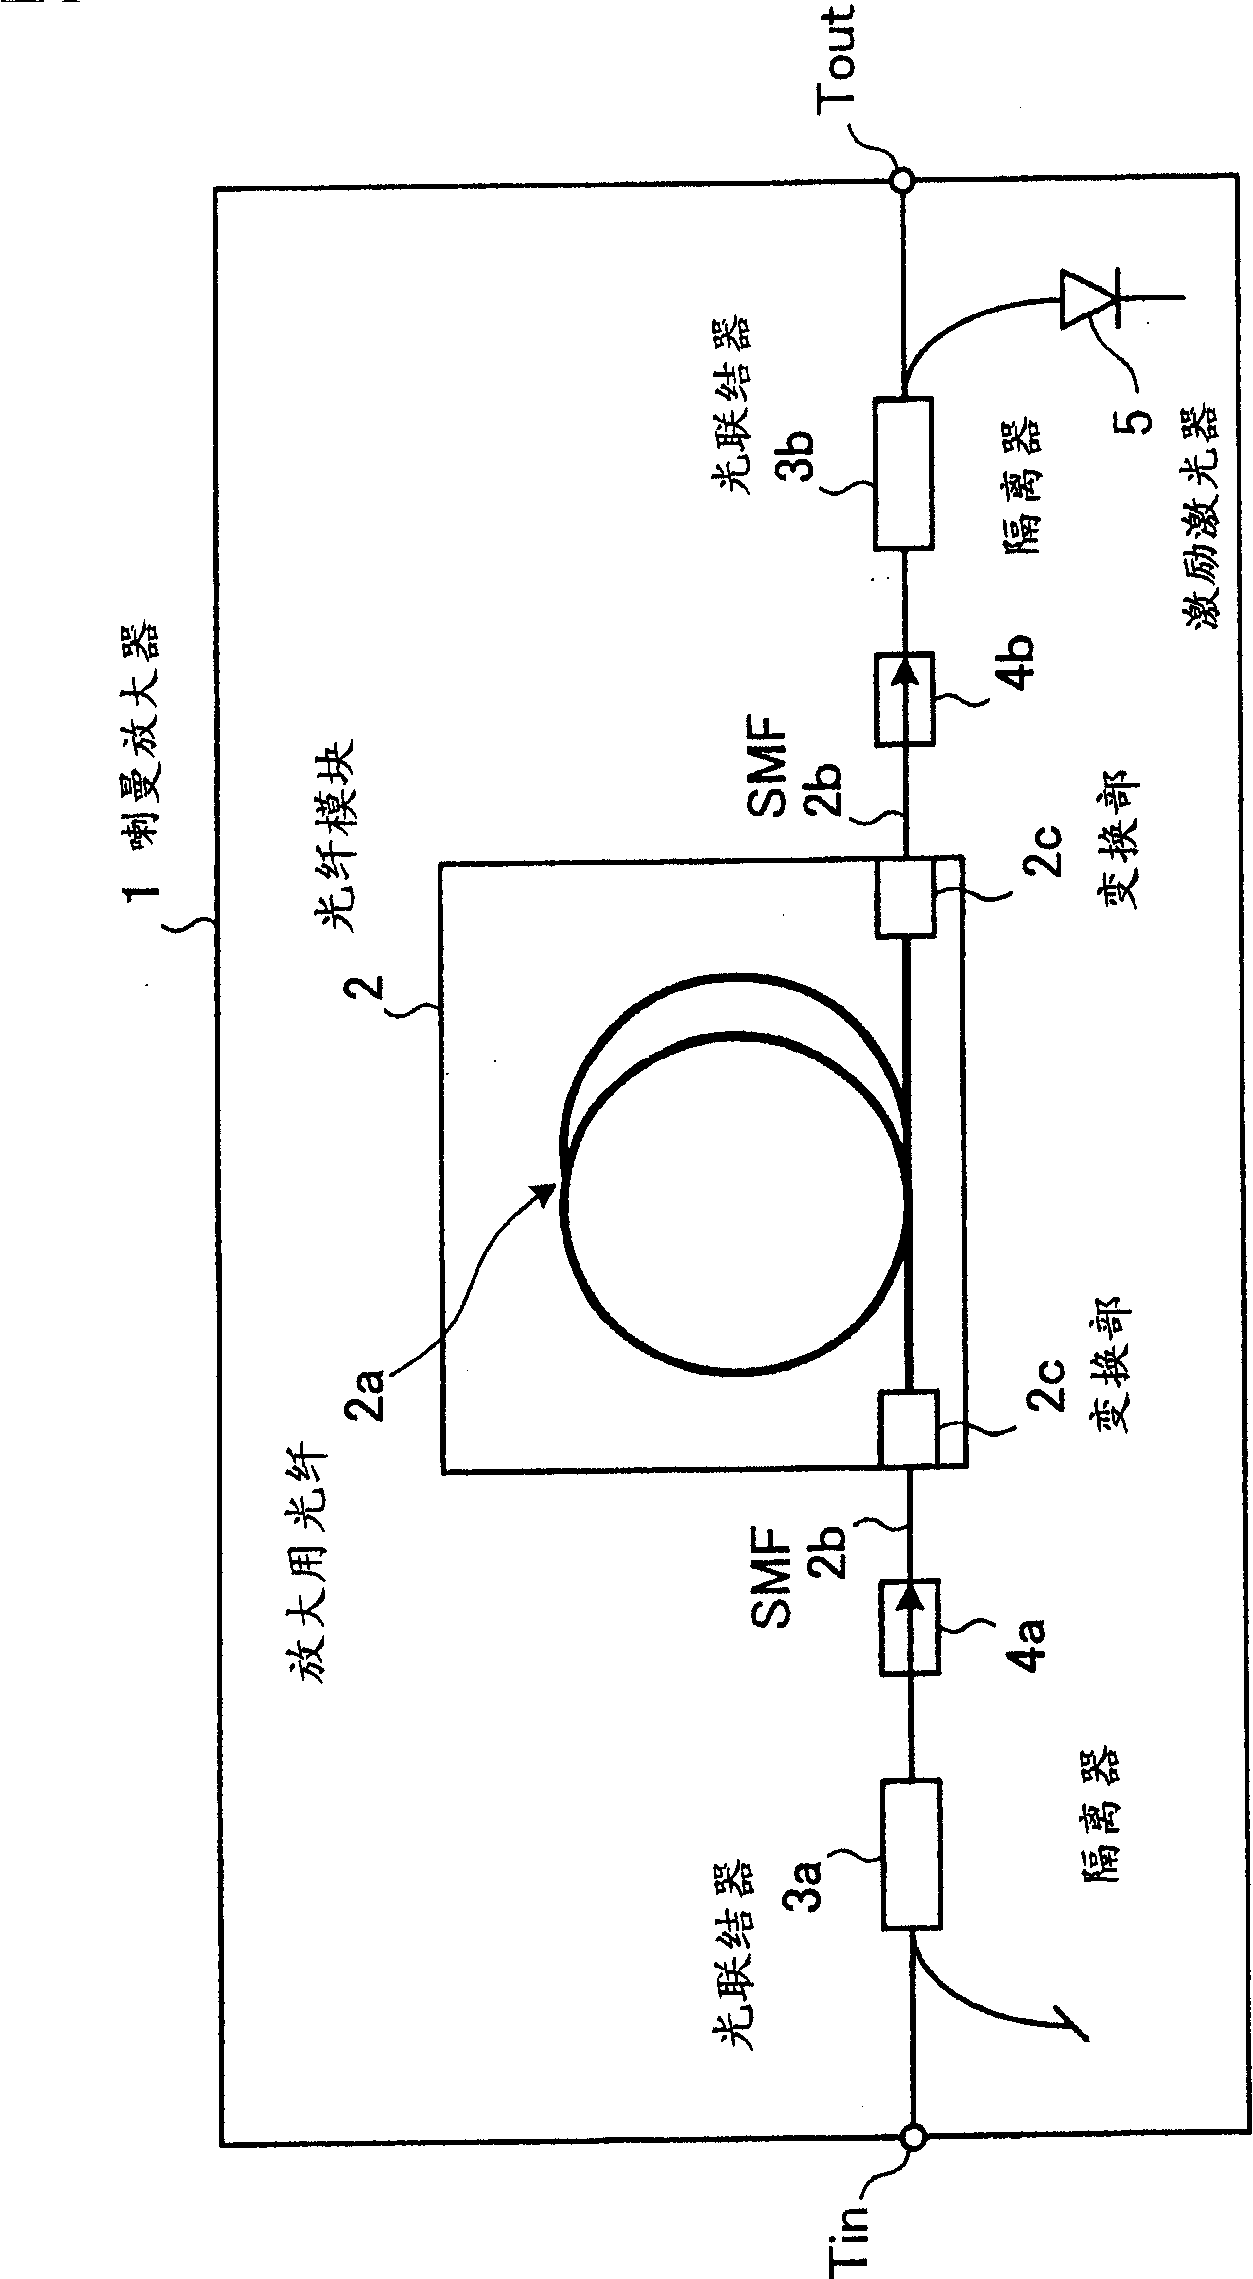 Optical fiber, optical fiber module, and raman amplifier